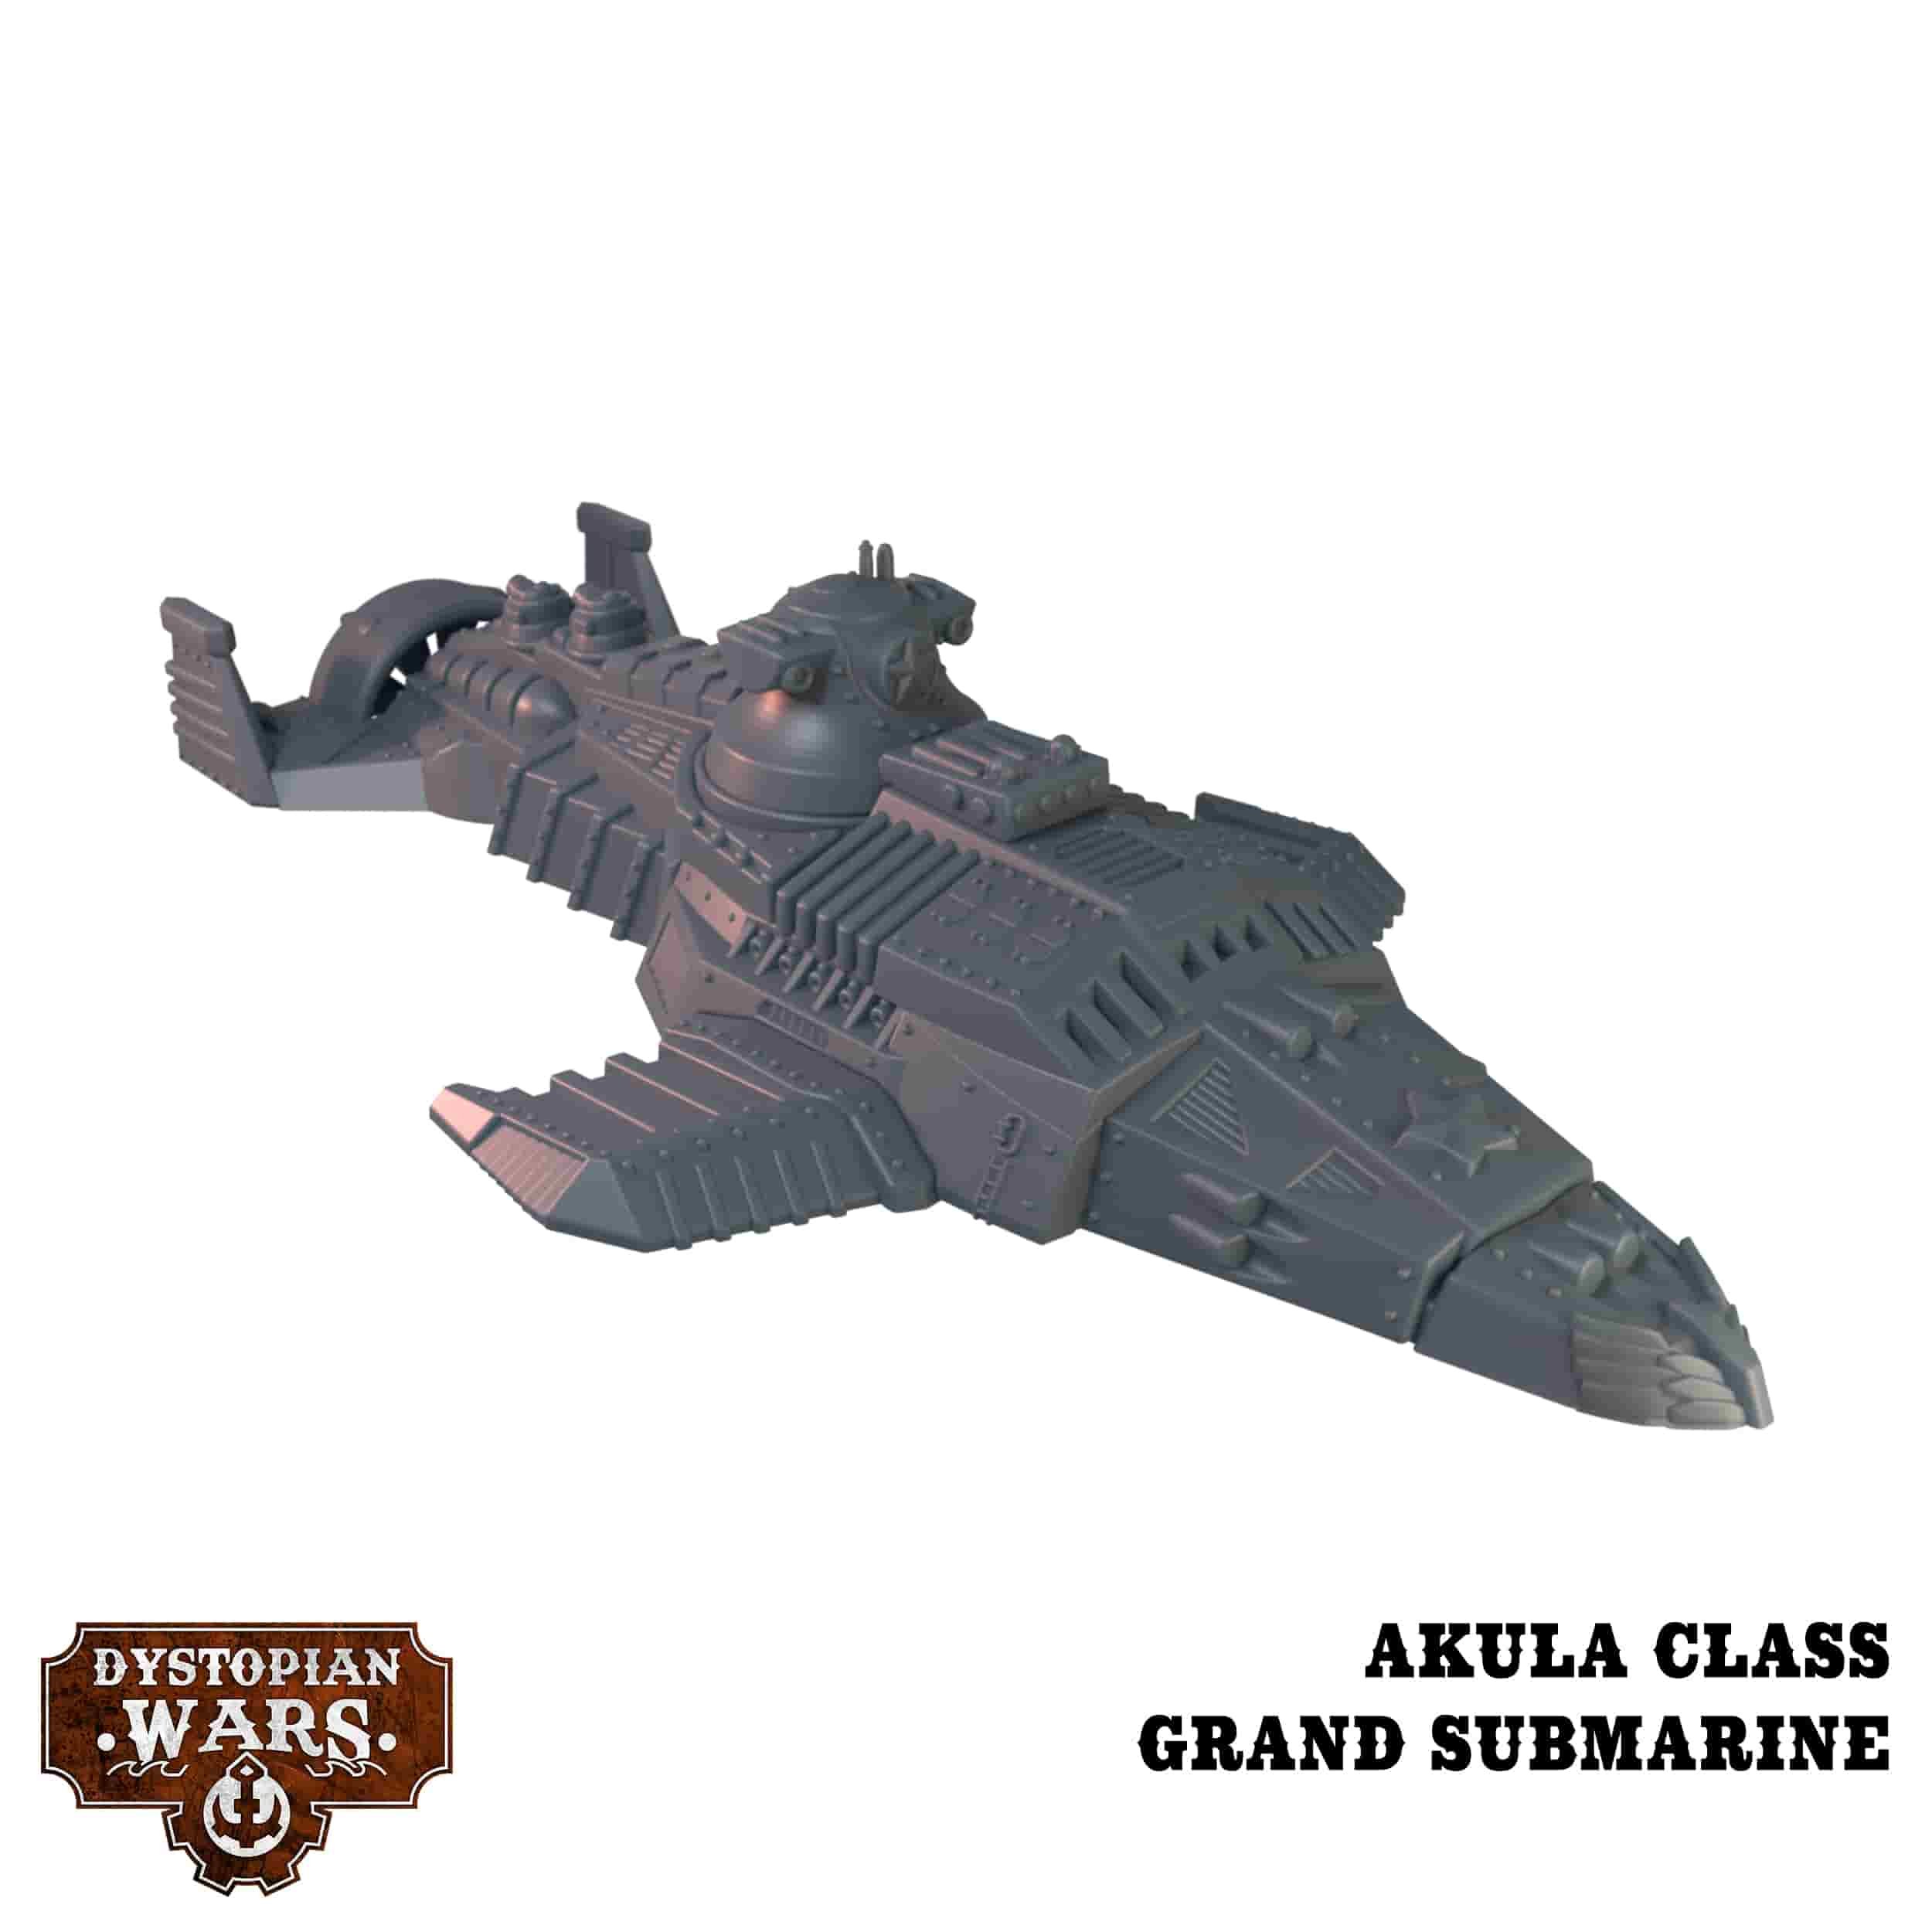 Akula Class Grand Submarine - Dystopian Wars